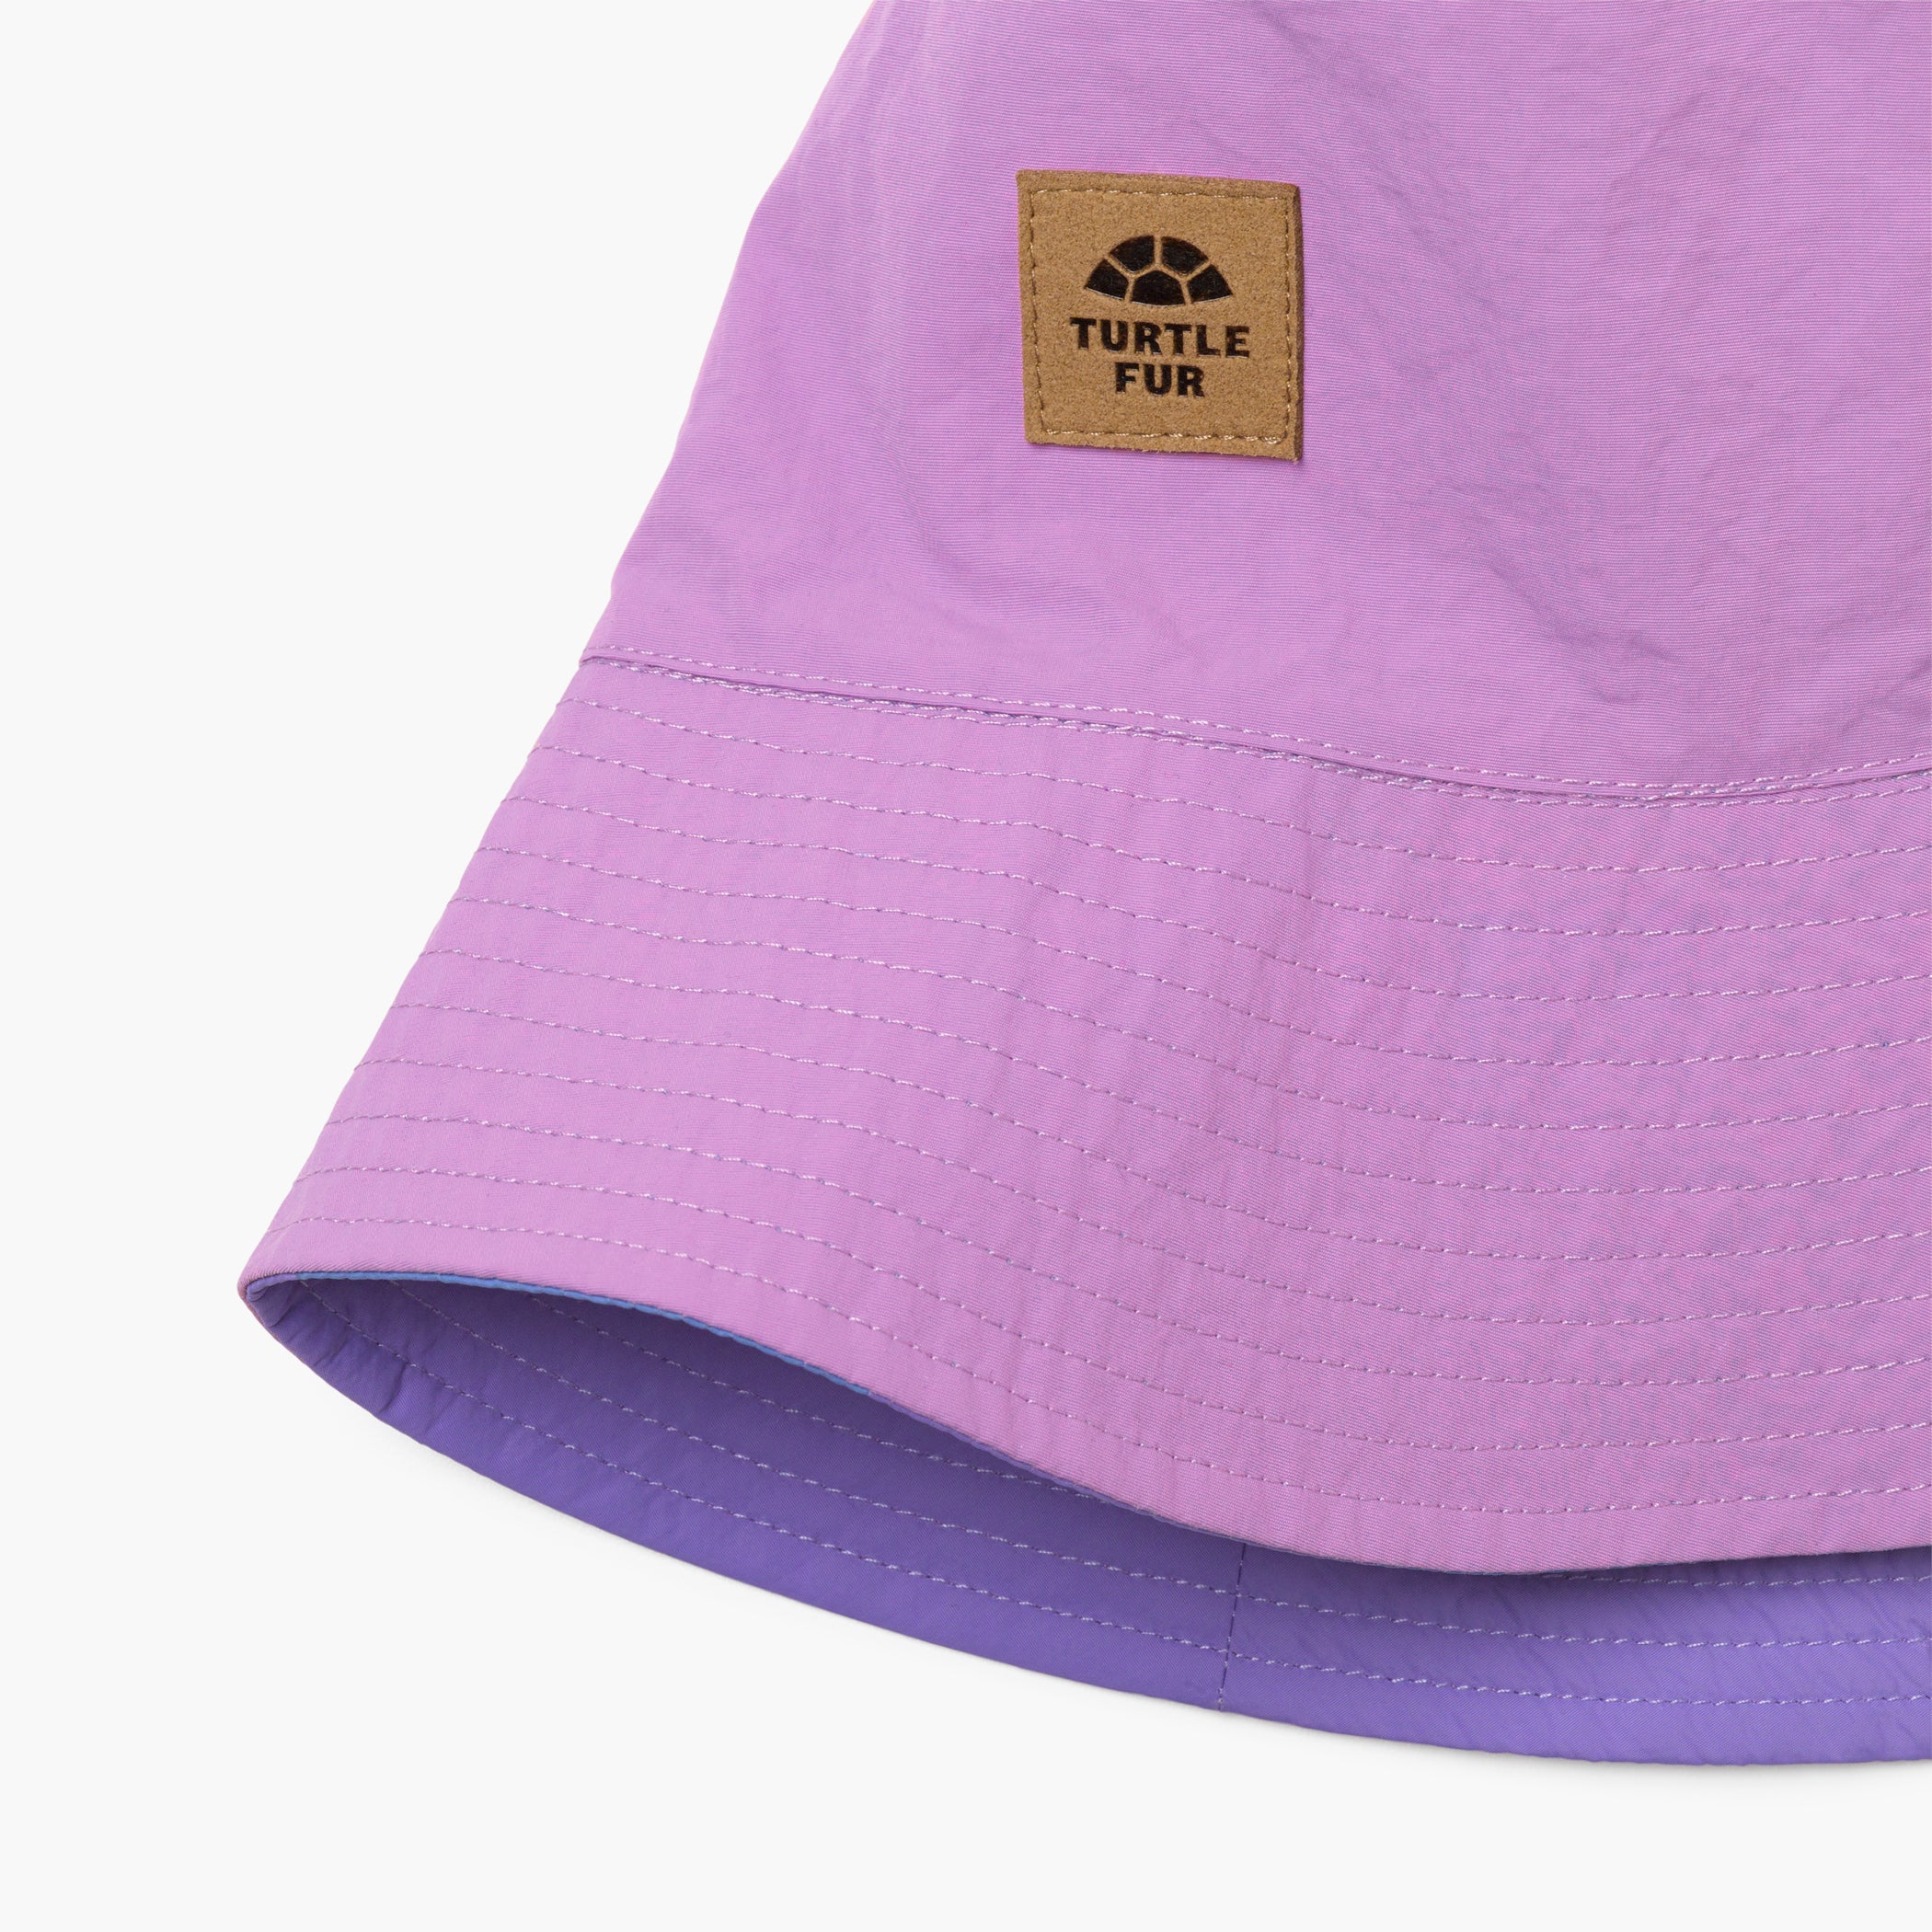 Dune Bucket Hat / Color-Lilac